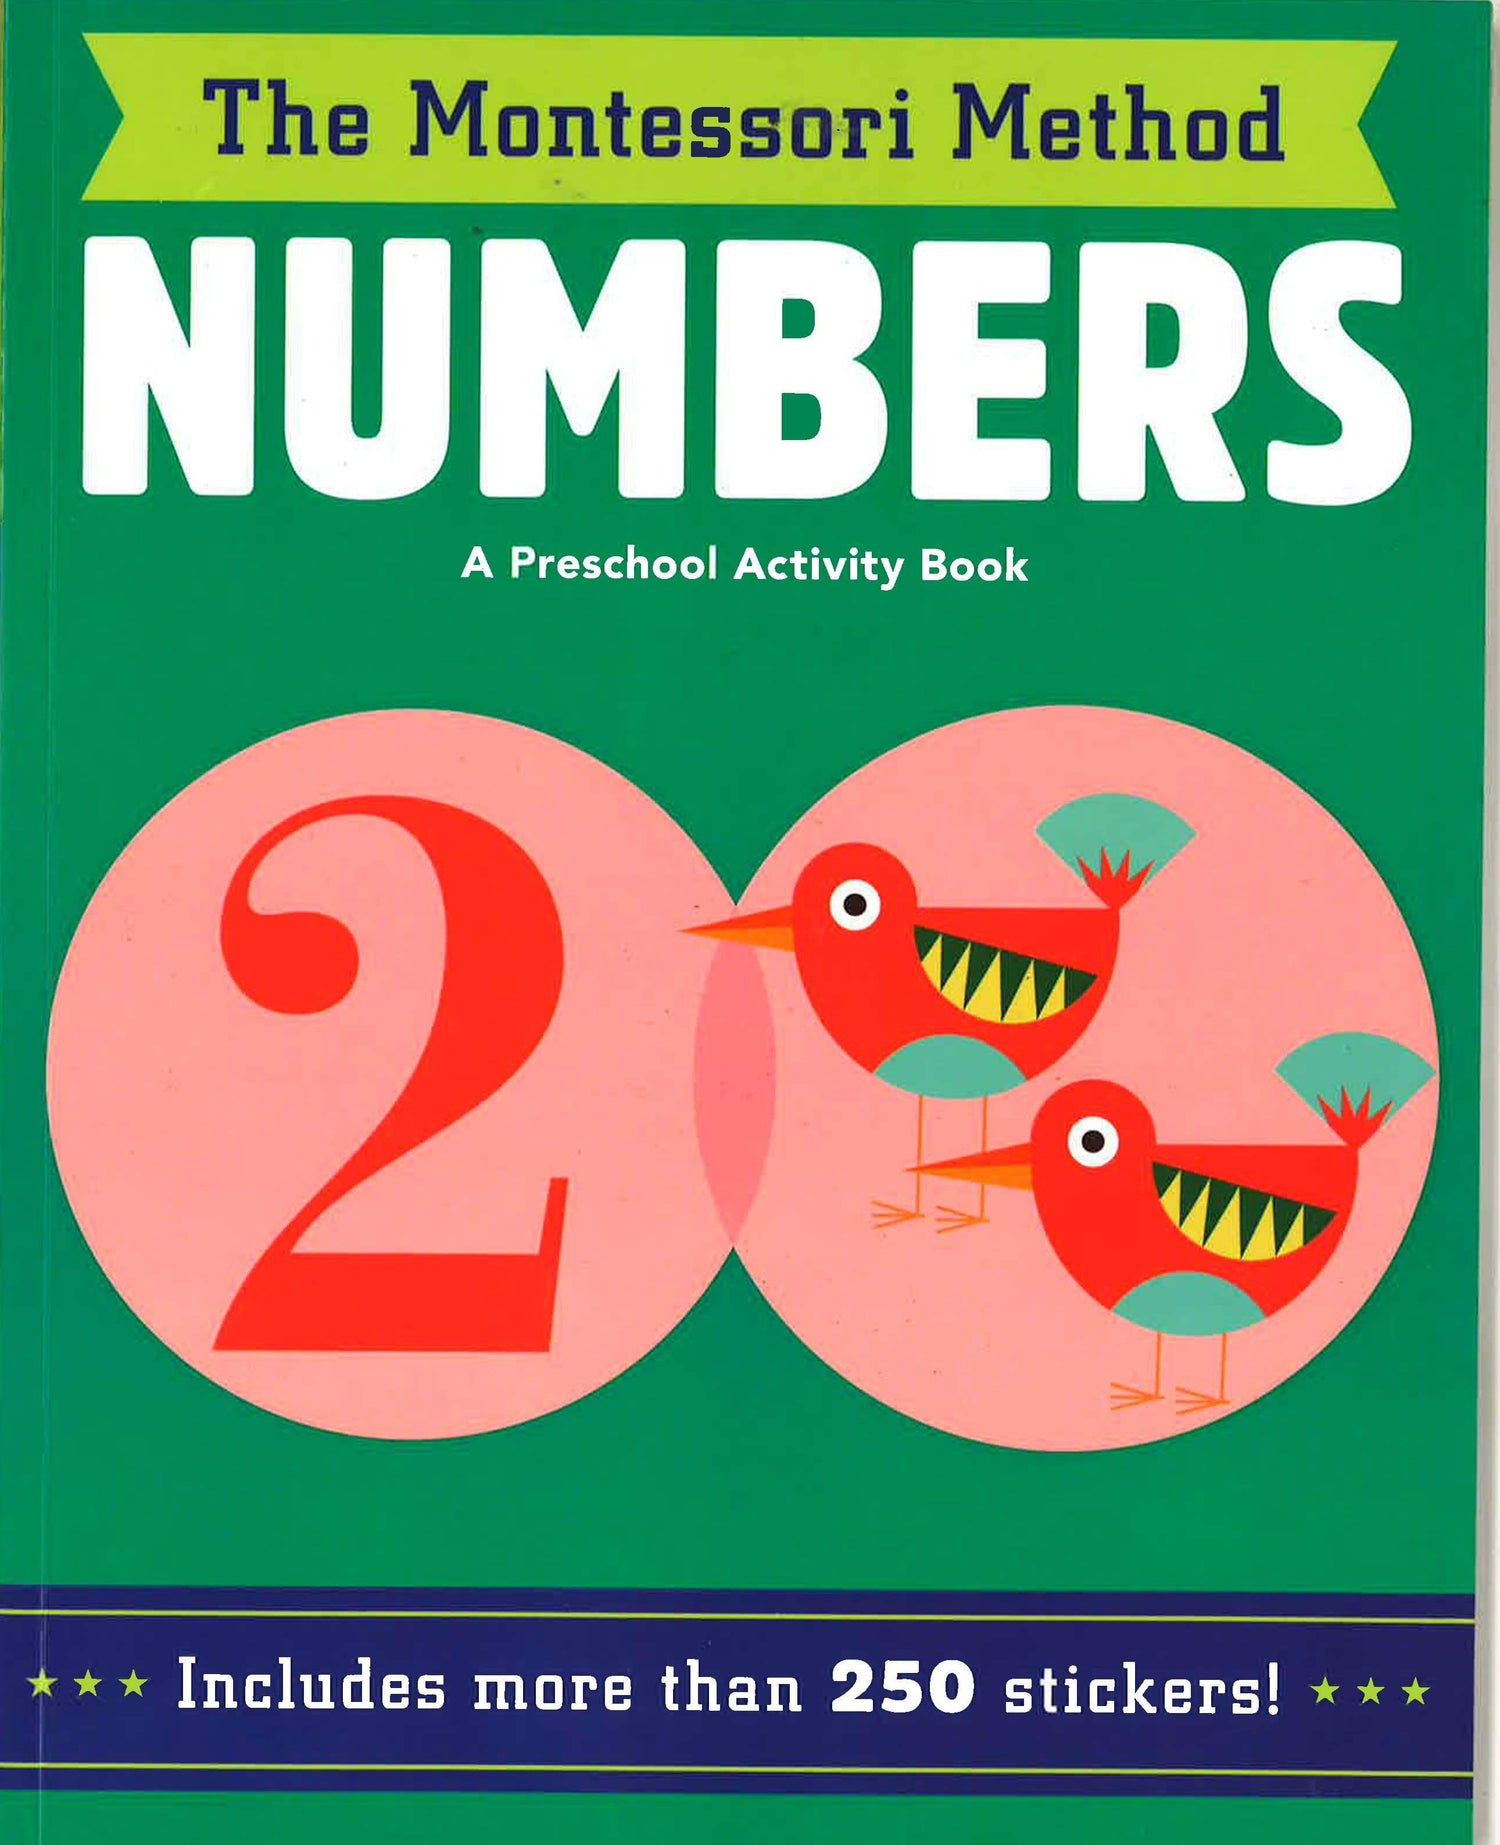 The Montessori Method: Numbers